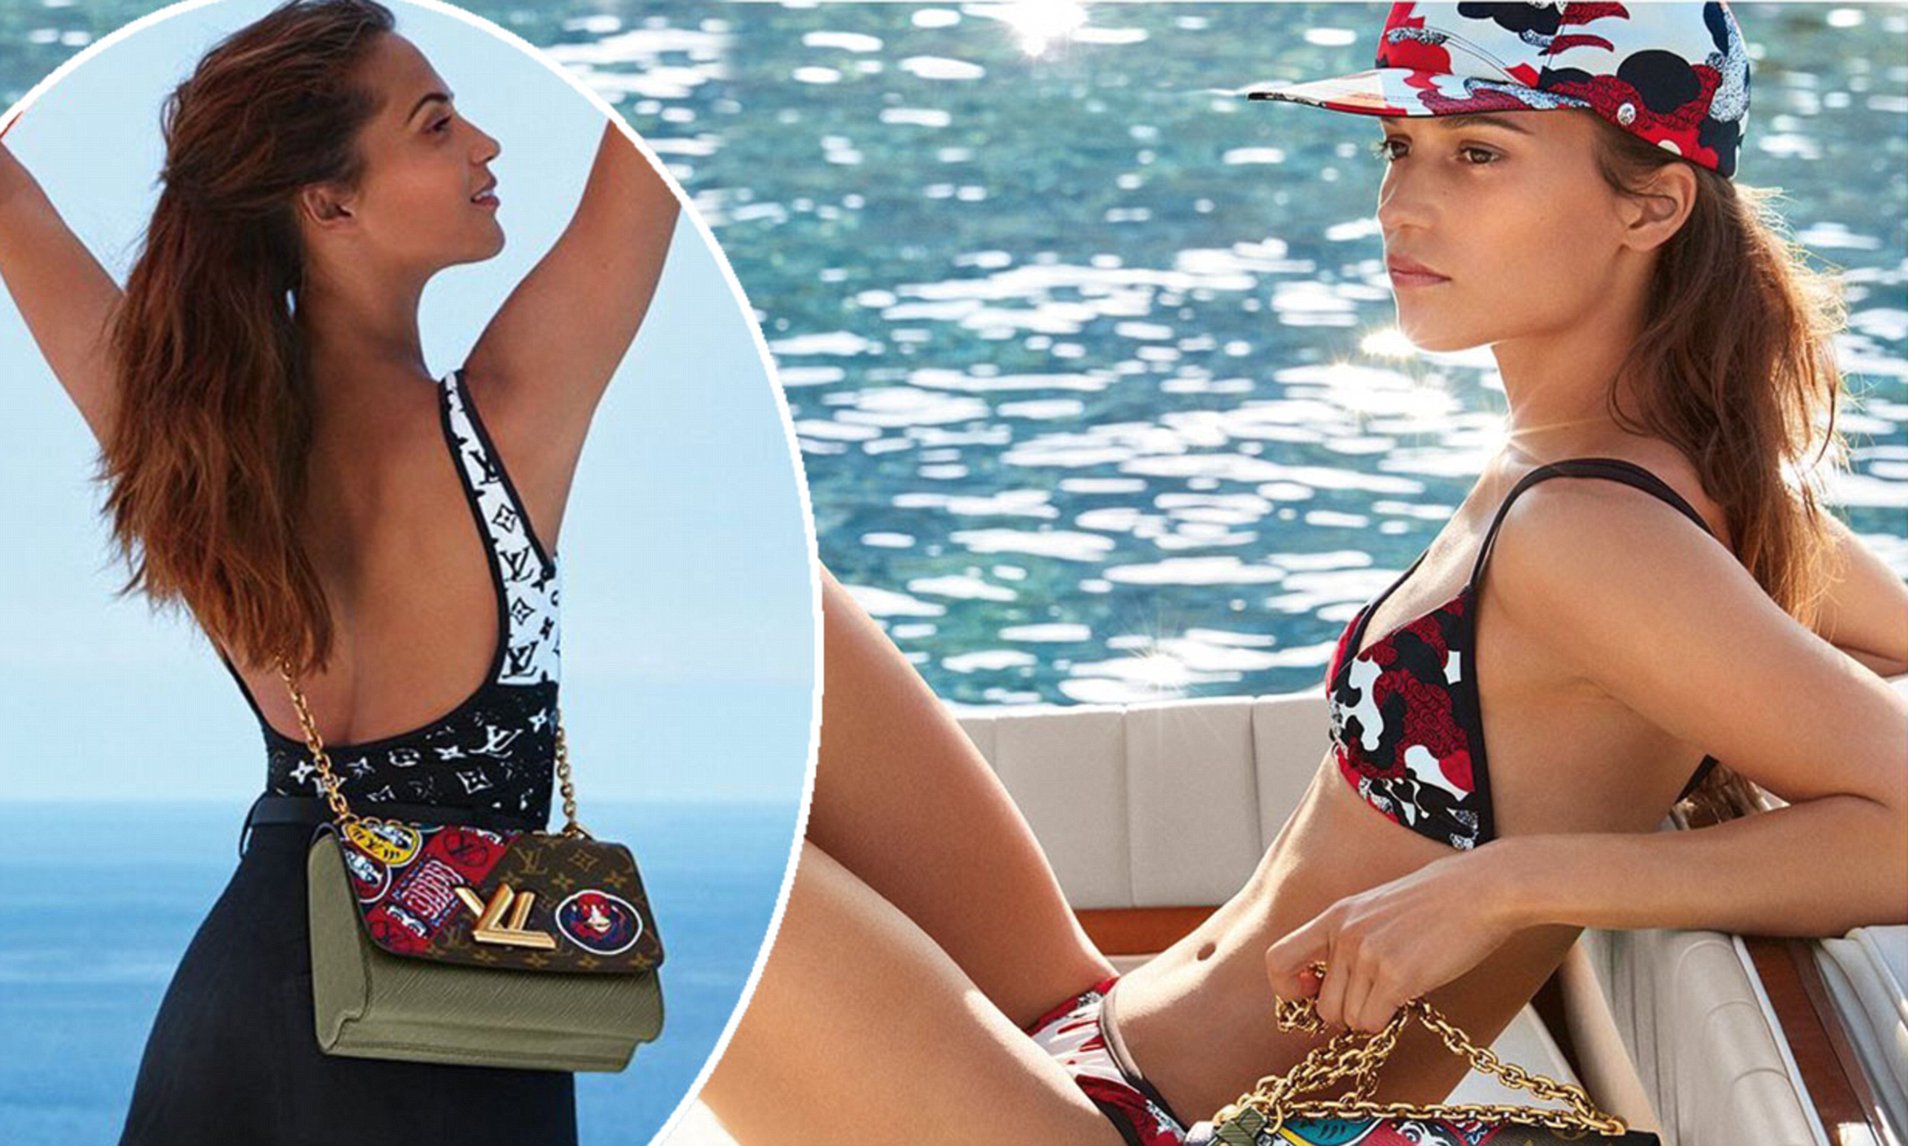 Alicia Vikander In Bikini And Cap For Louis Vuitton Cruise Campaign Wallpapers